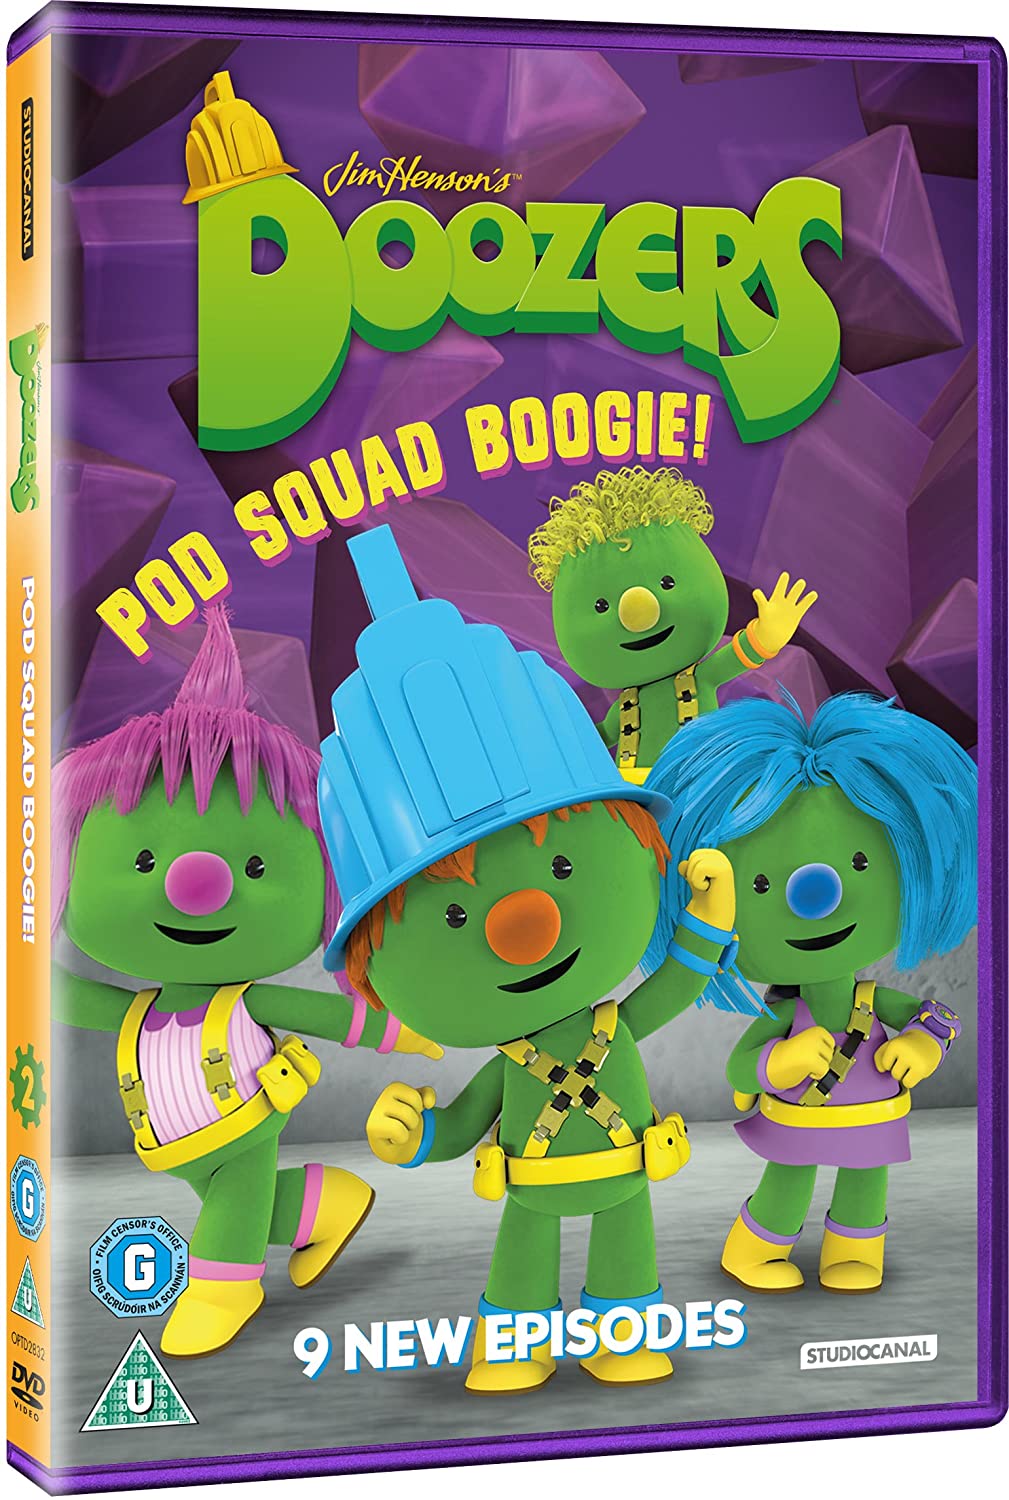 Doozers - Pod Squad Boogie [2015] - Animation [DVD]